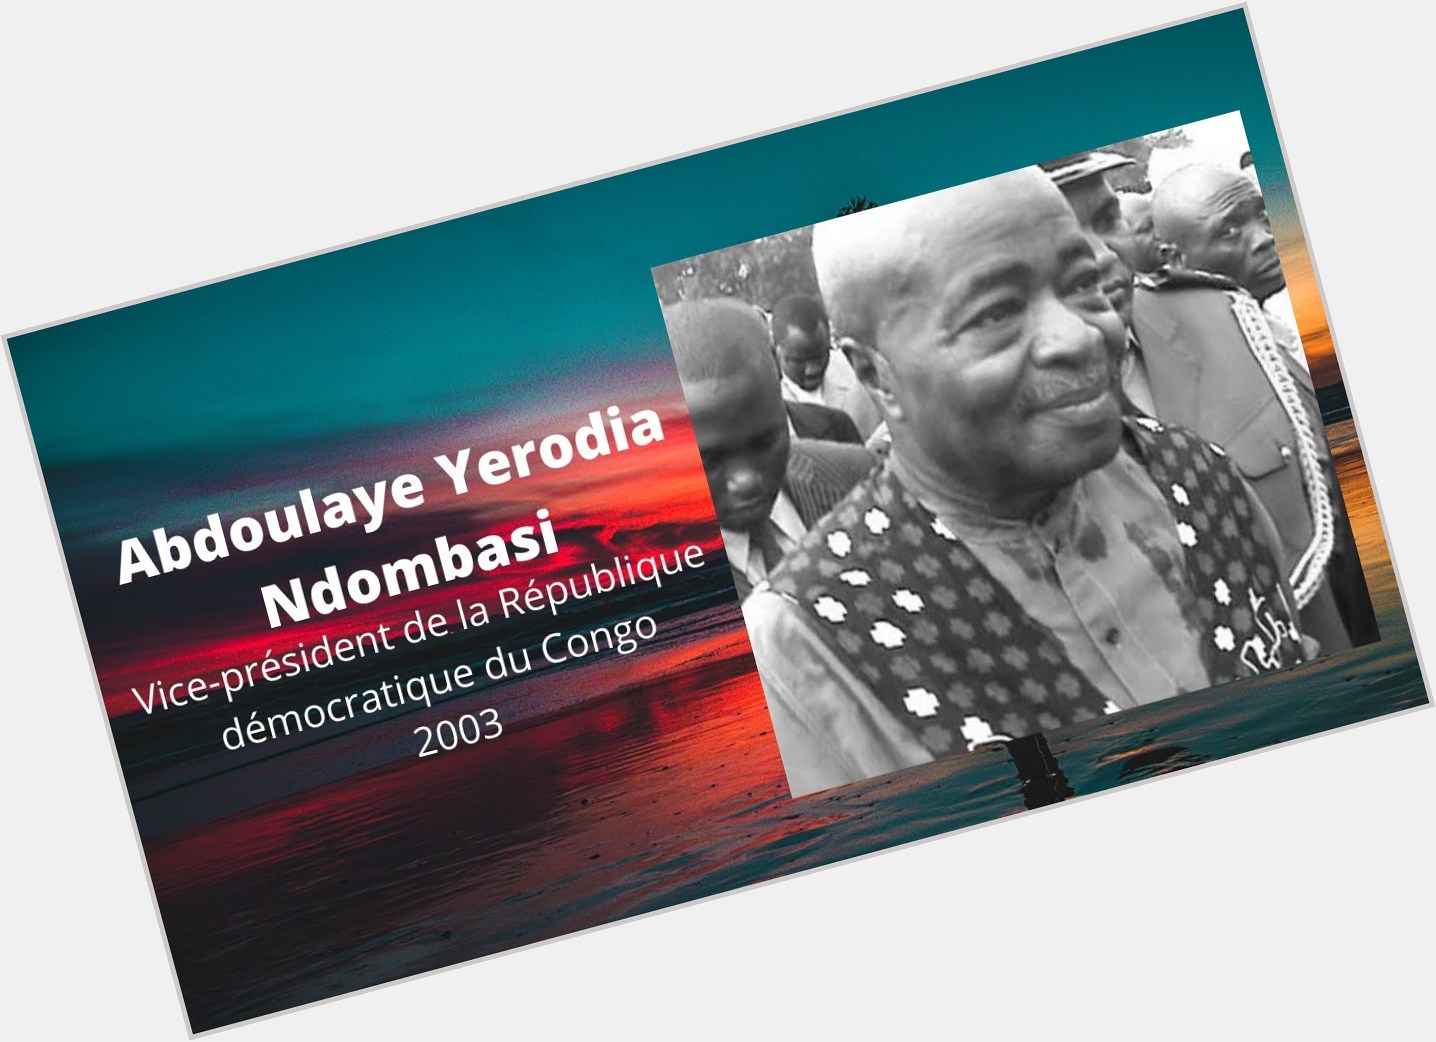 Abdoulaye Yerodia Ndombasi dating 2